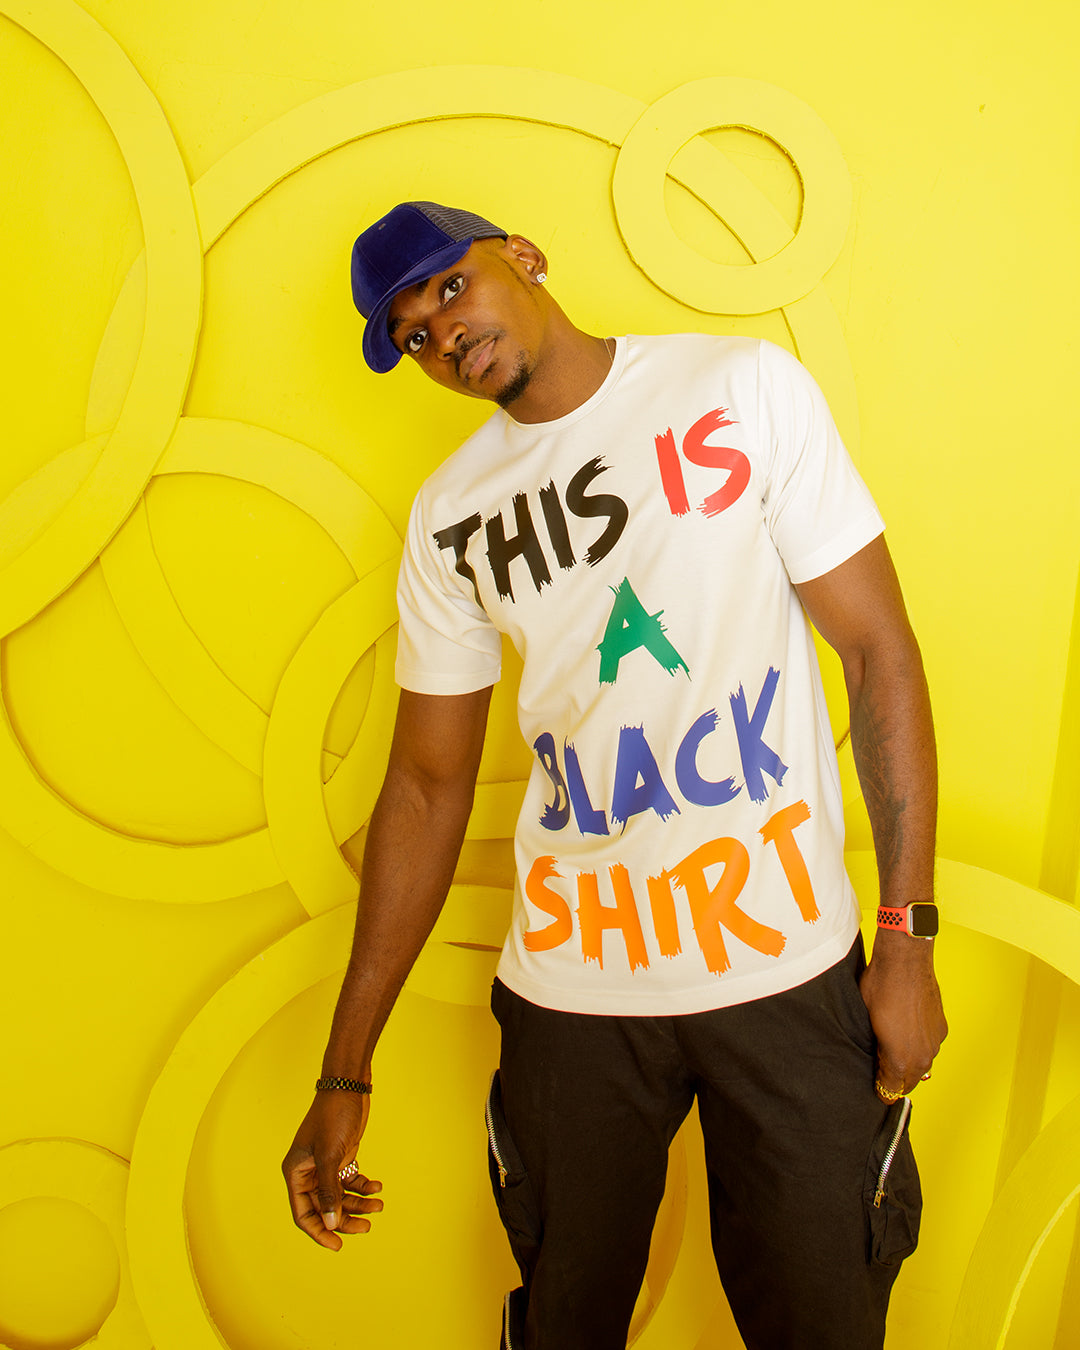 CURBAN THIS IS A BLACK SHIRT Slogan Oversized Male T-Shirt